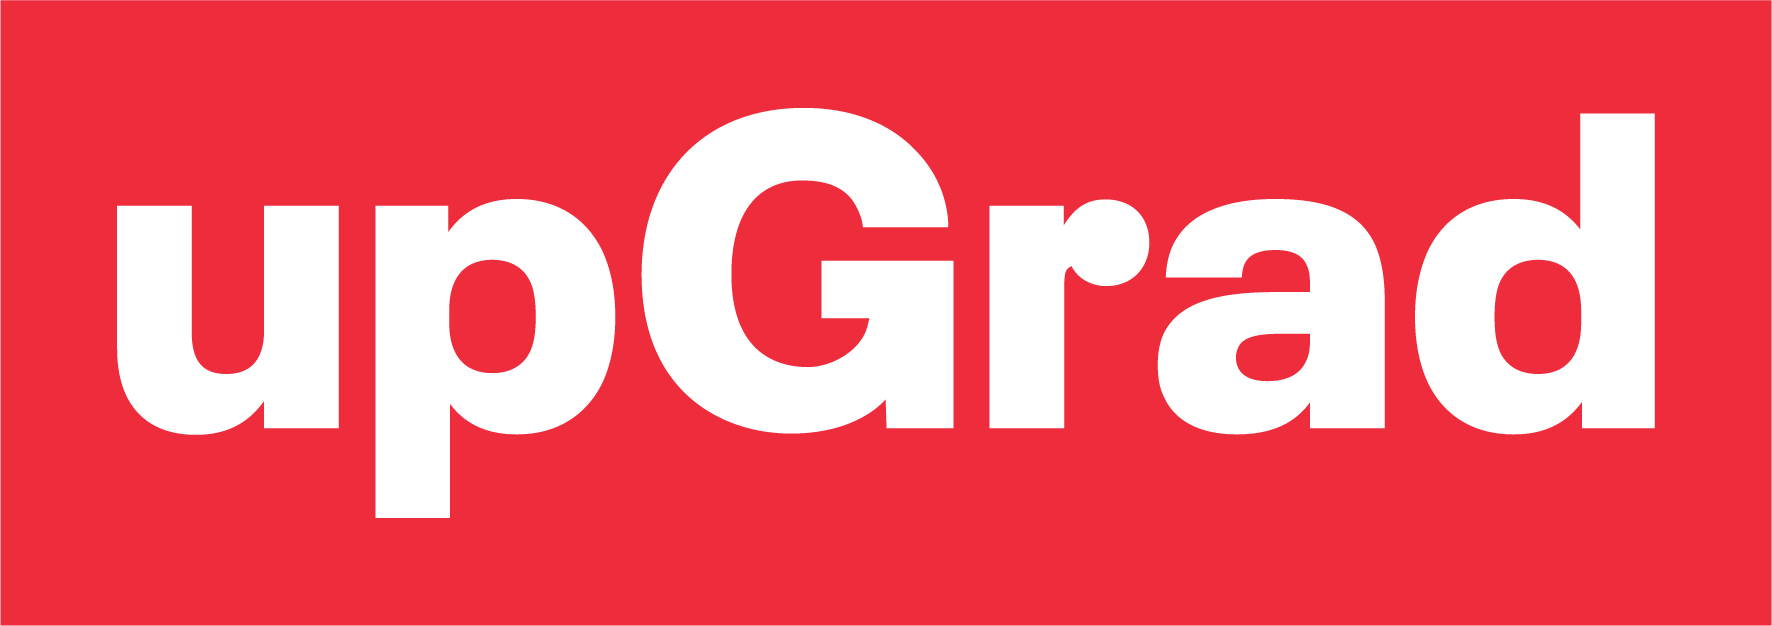 Free Digital Marketing Courses in Calgary - UpGrad logo